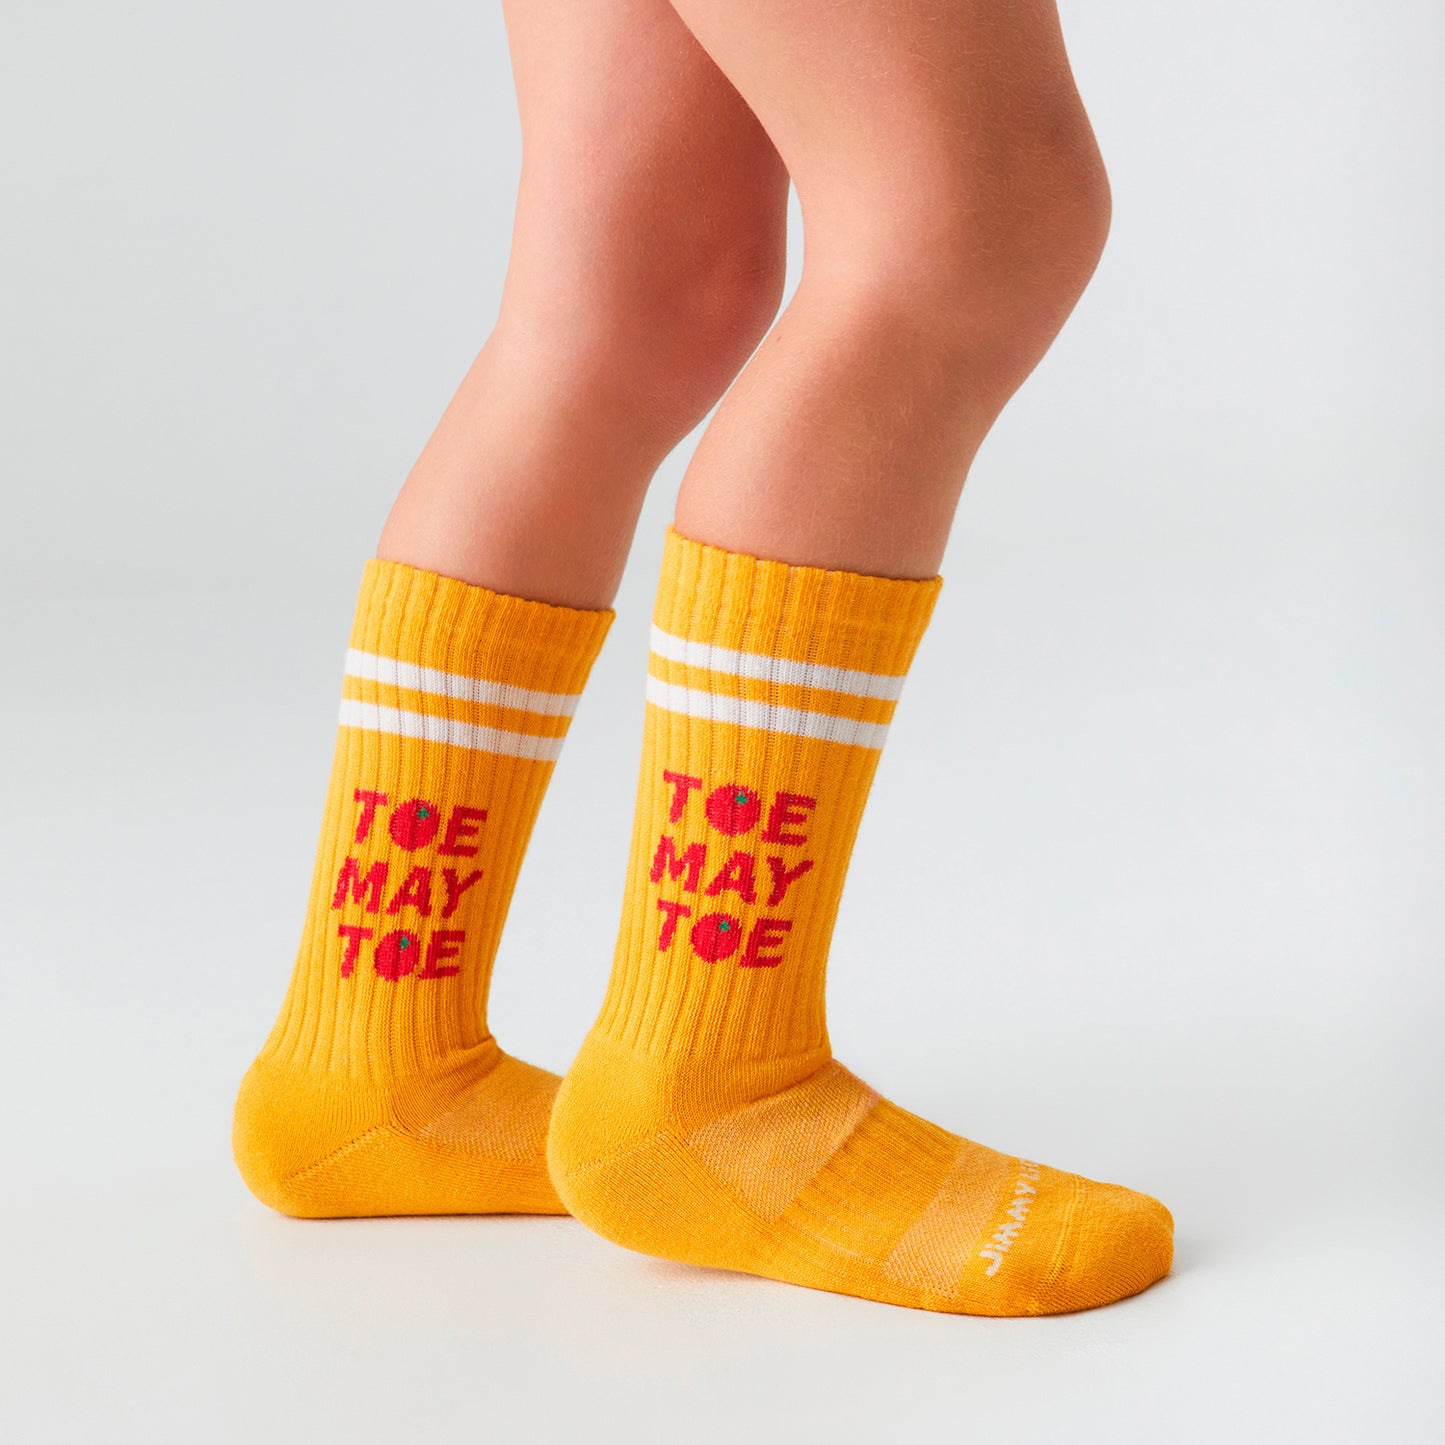 Kids Athletic Toe-May-Toe - Mustard (1)